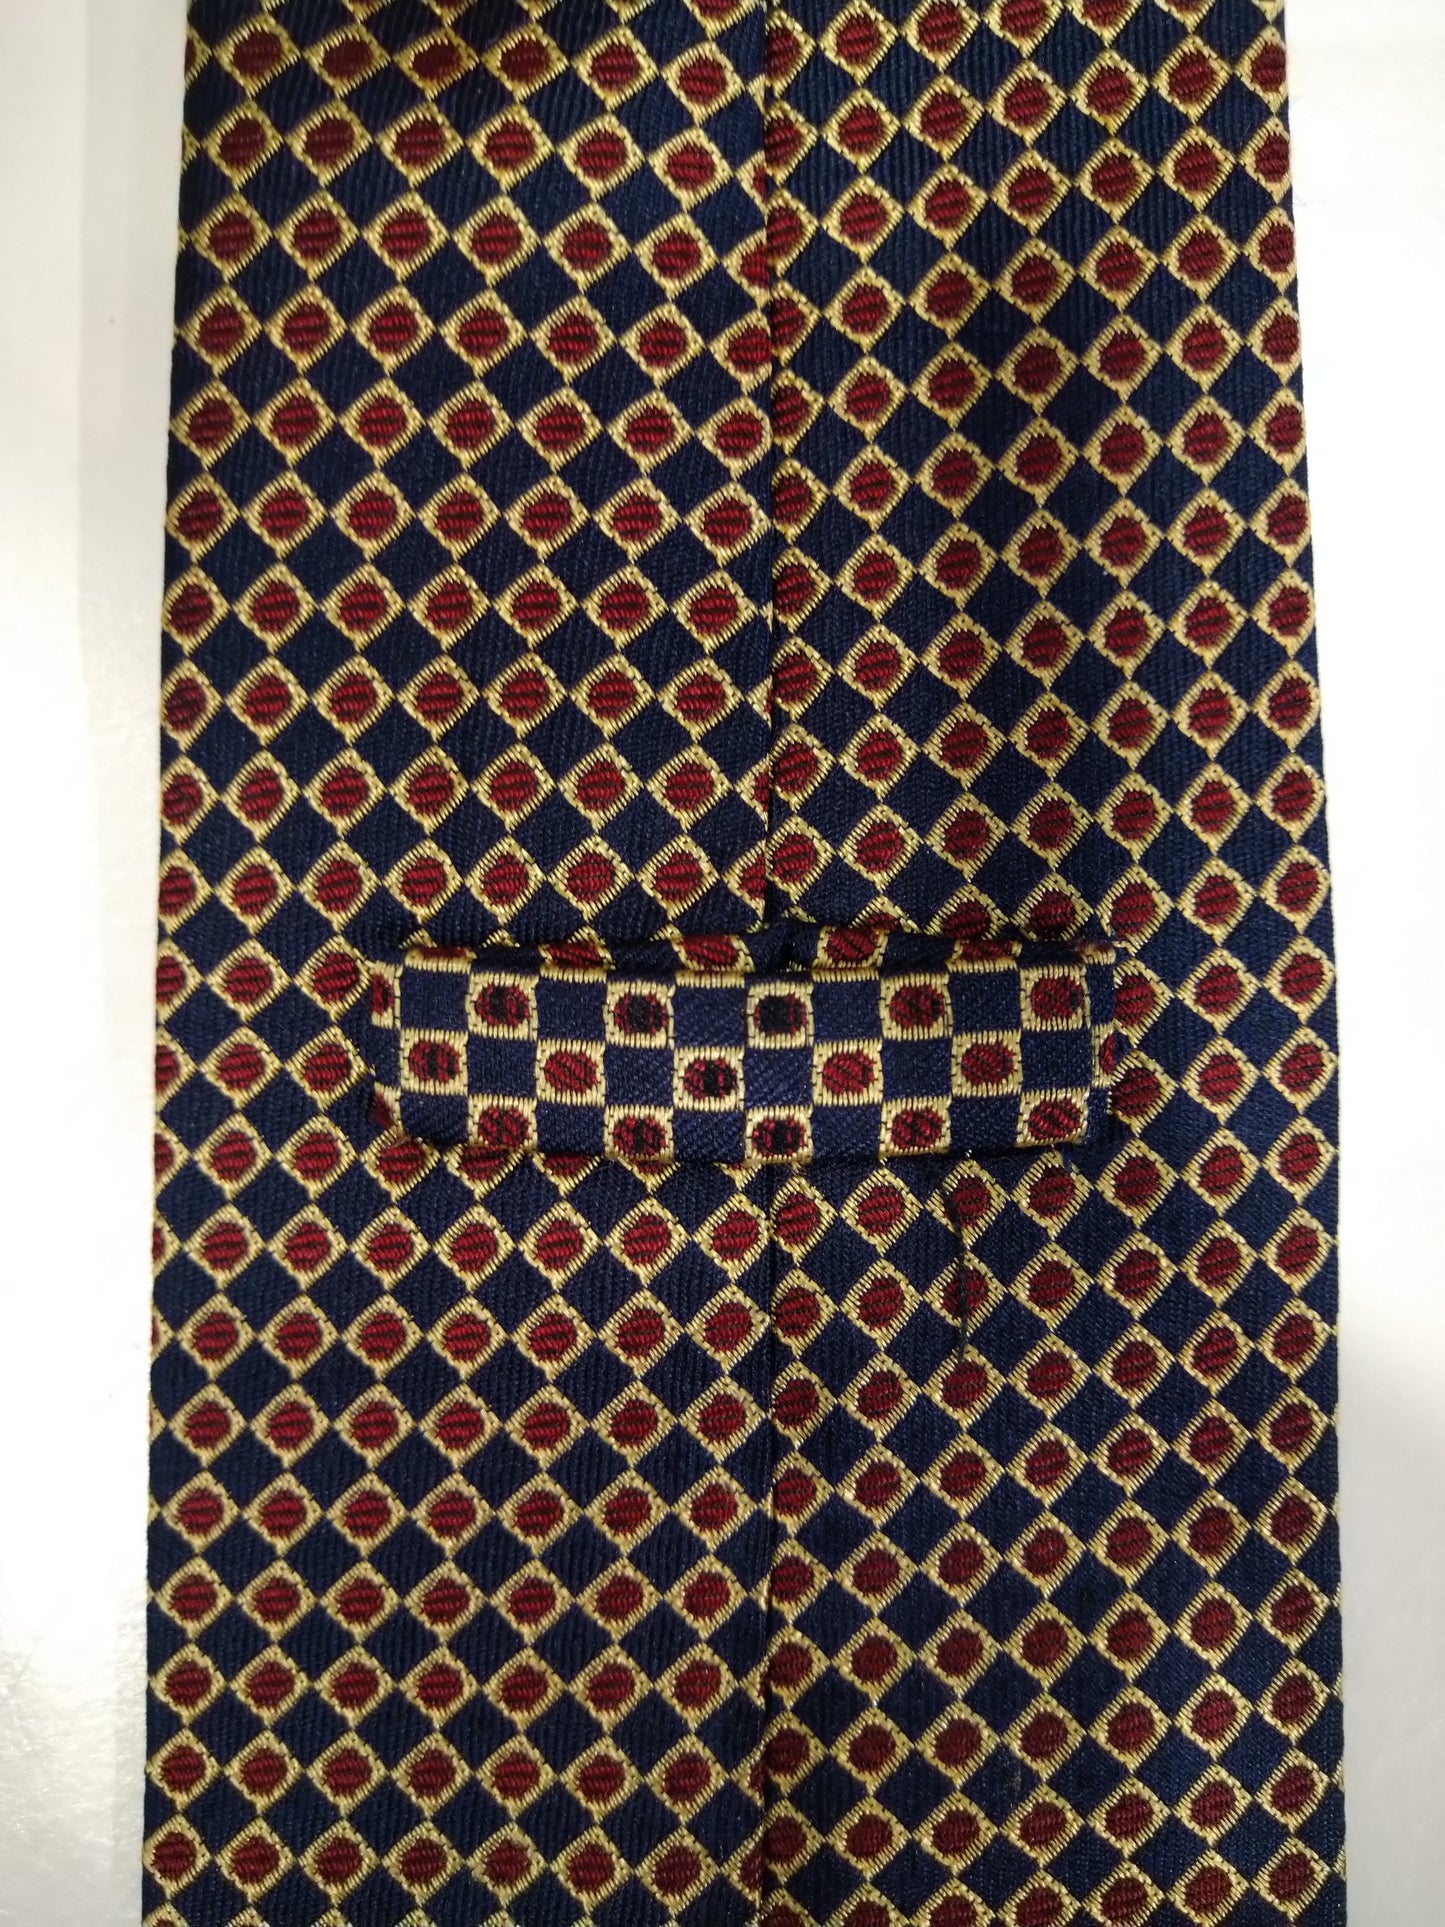 Vintage silk tie. Blue with gold / red balls motif.